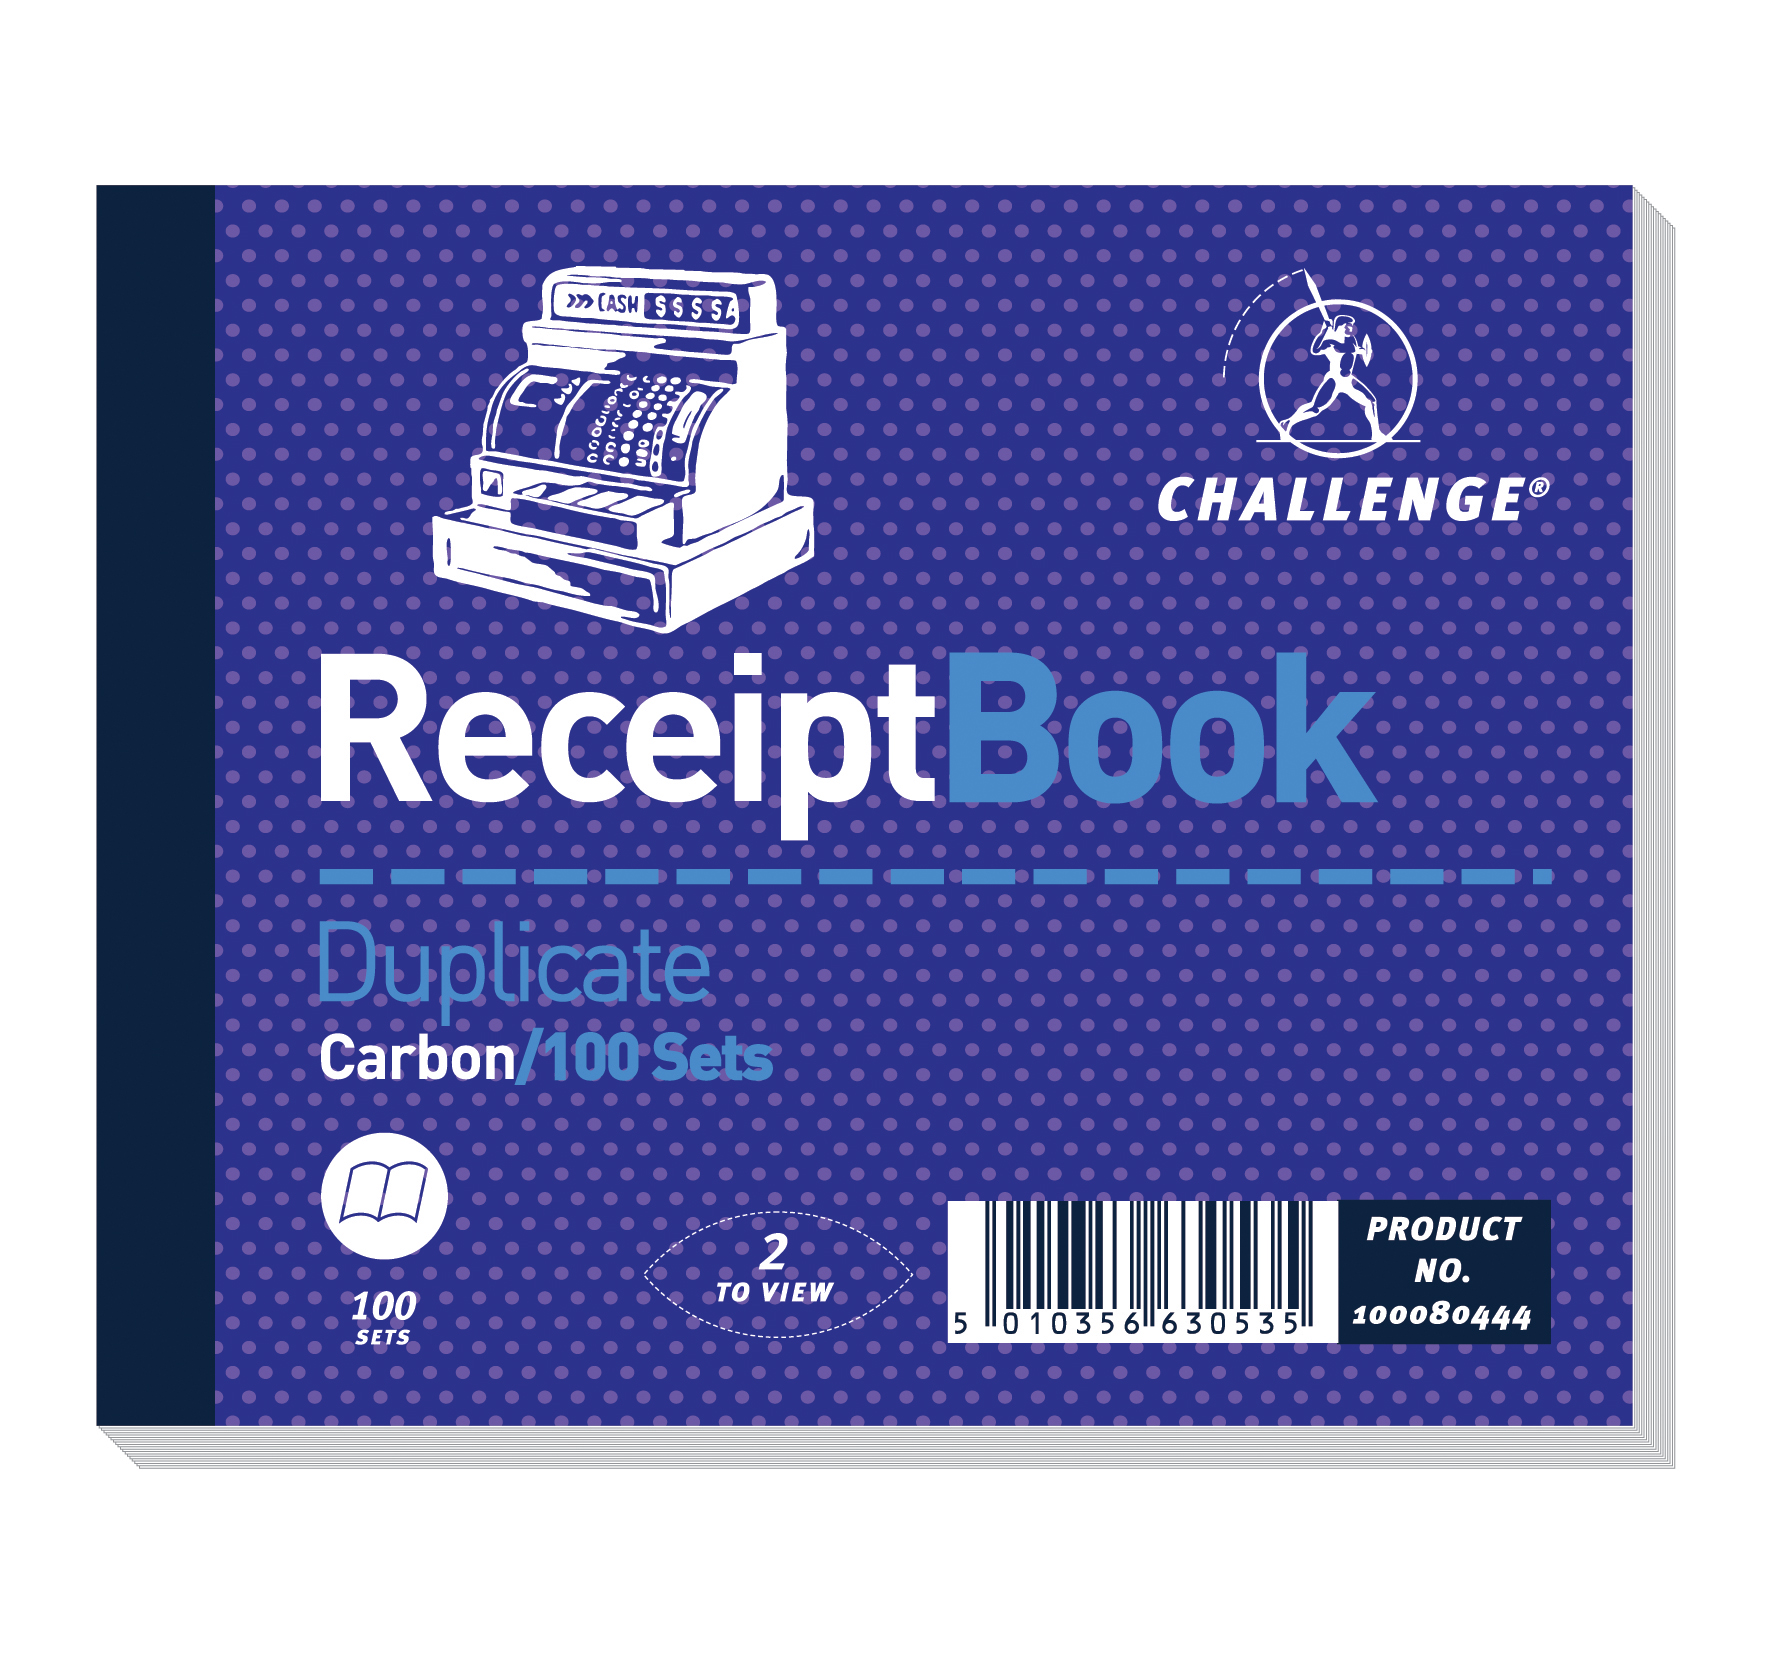 Challenge 105x130mm Dup Receipt Book PK5